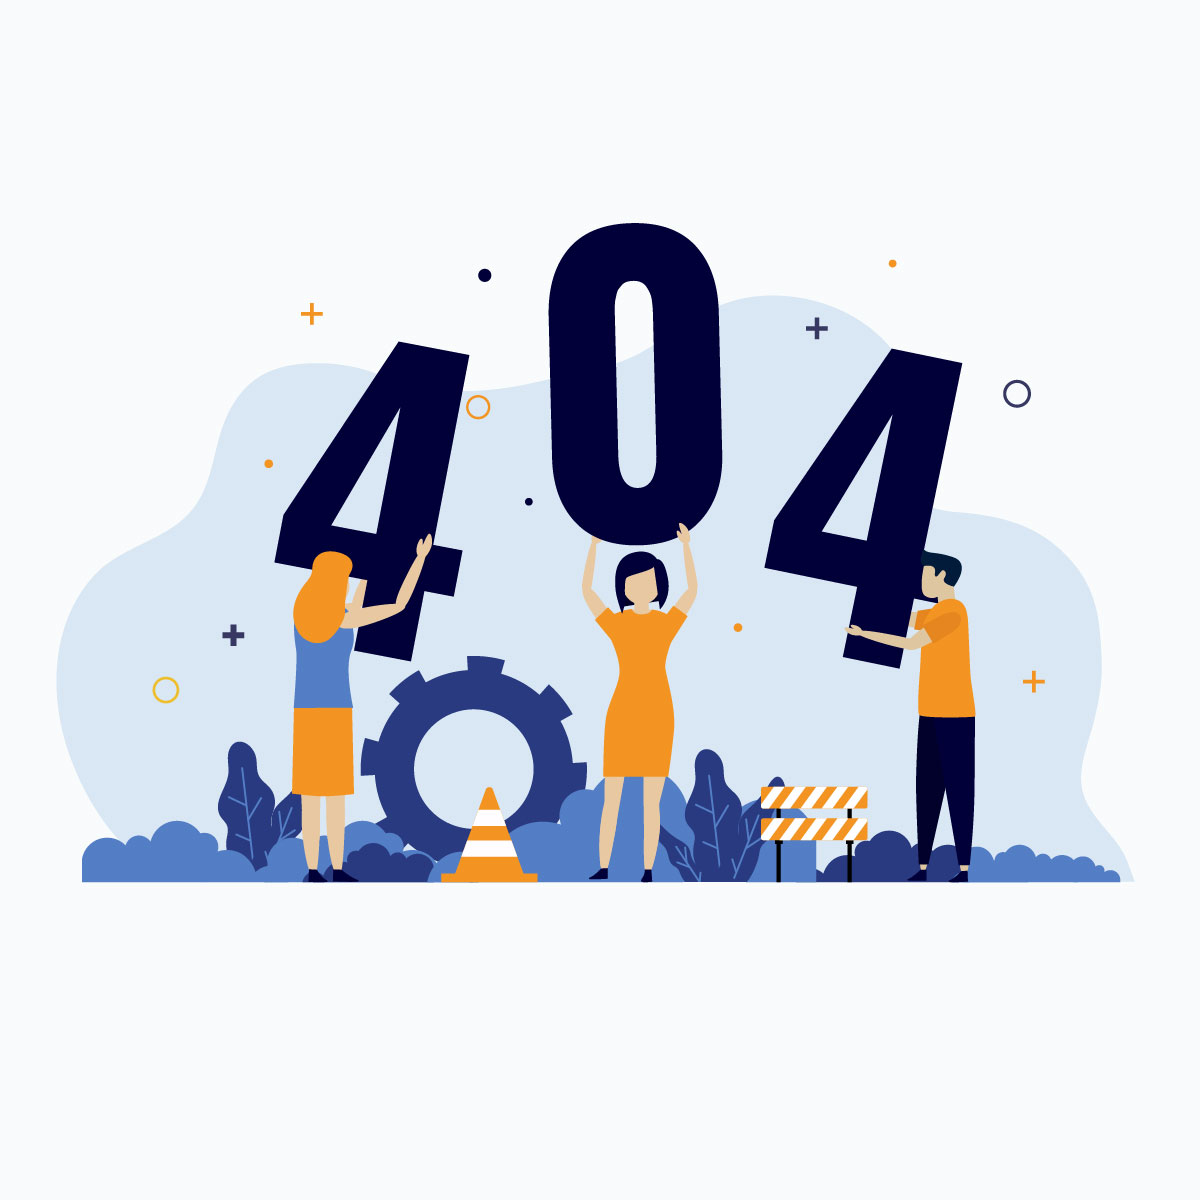 Страница не найдена - код 404 | seobut.com